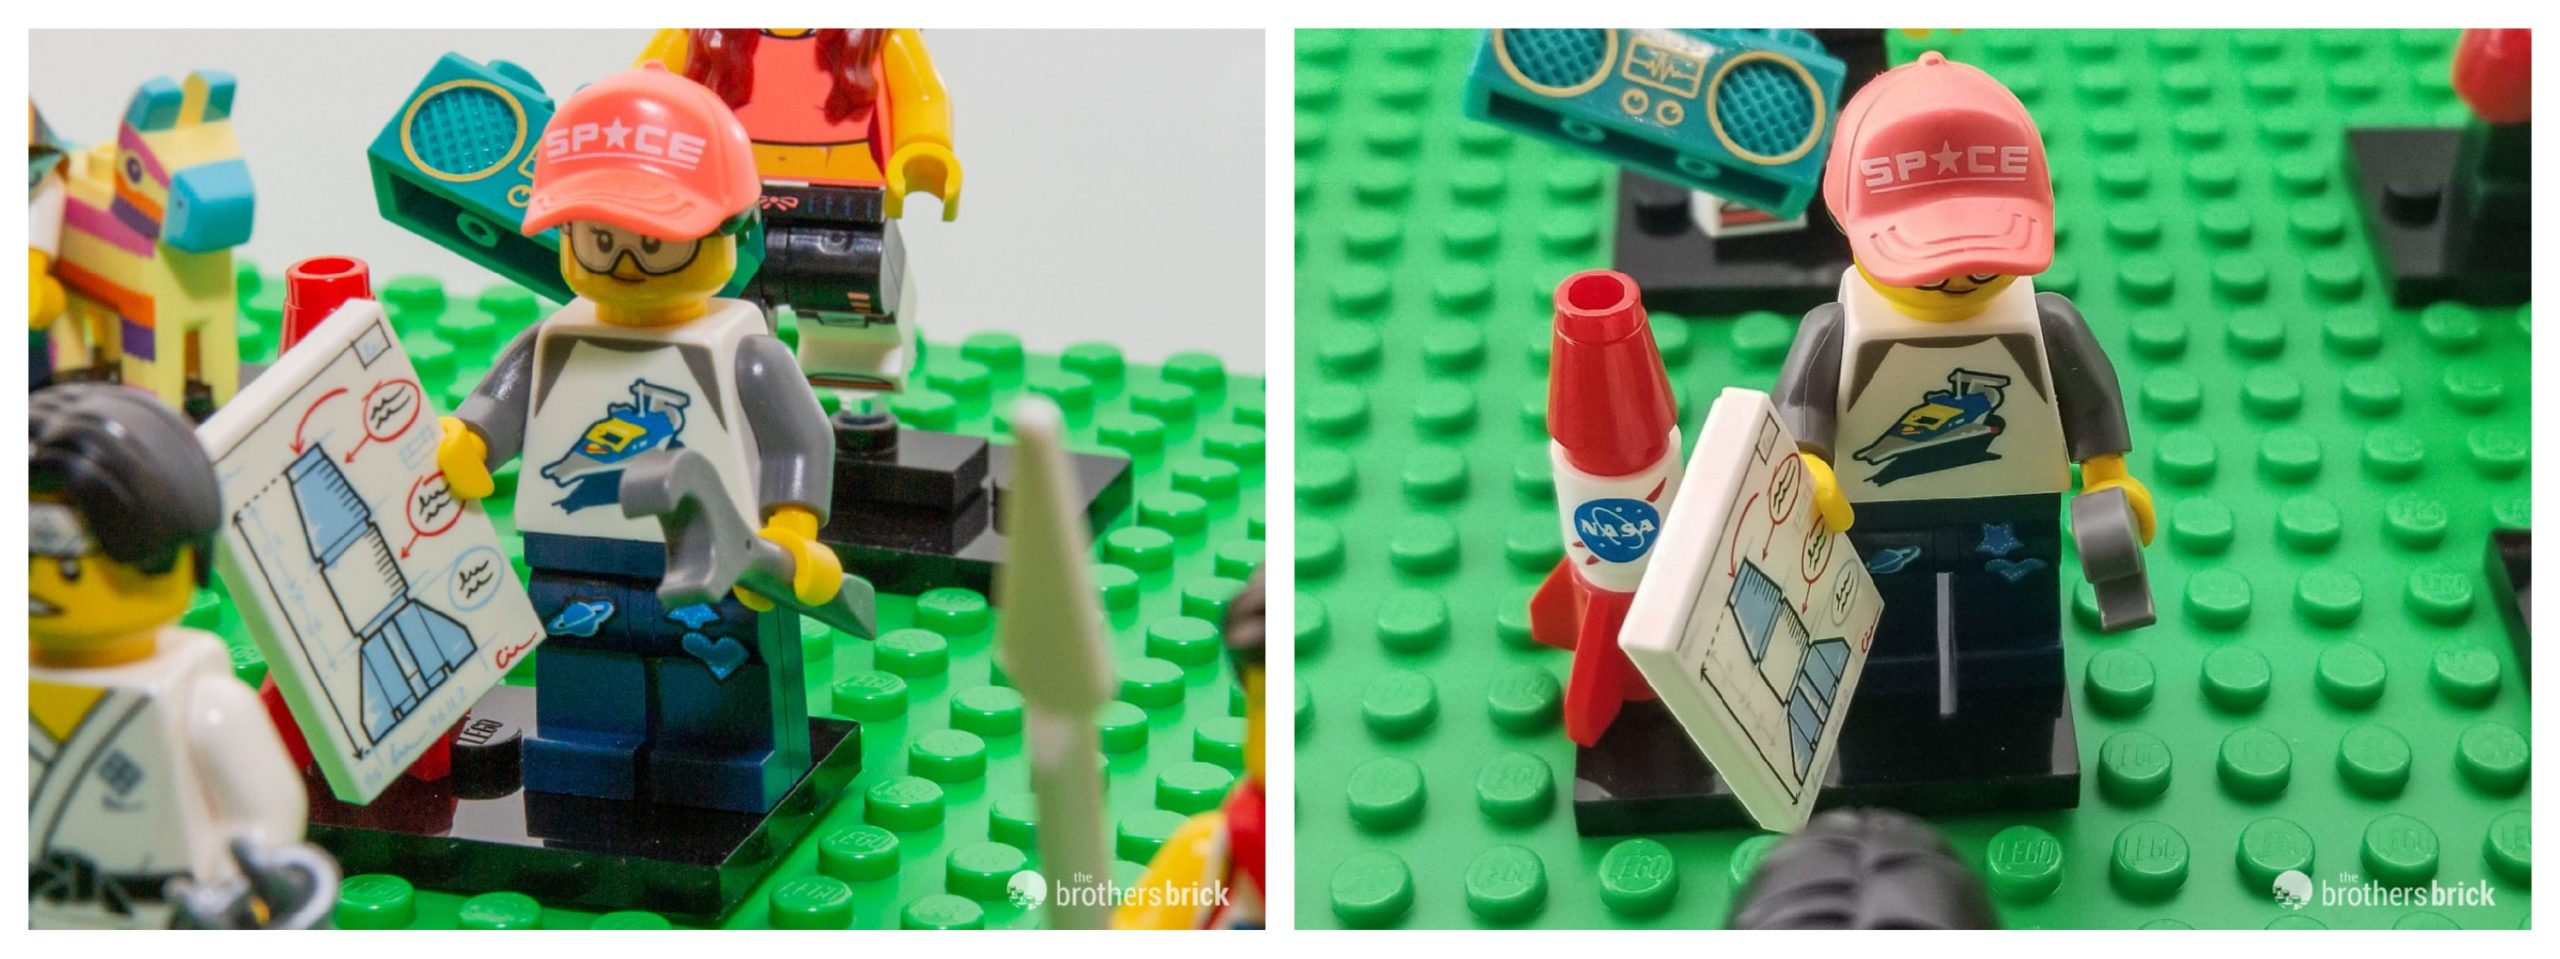 LEGO Collectible Minifigure Series 20